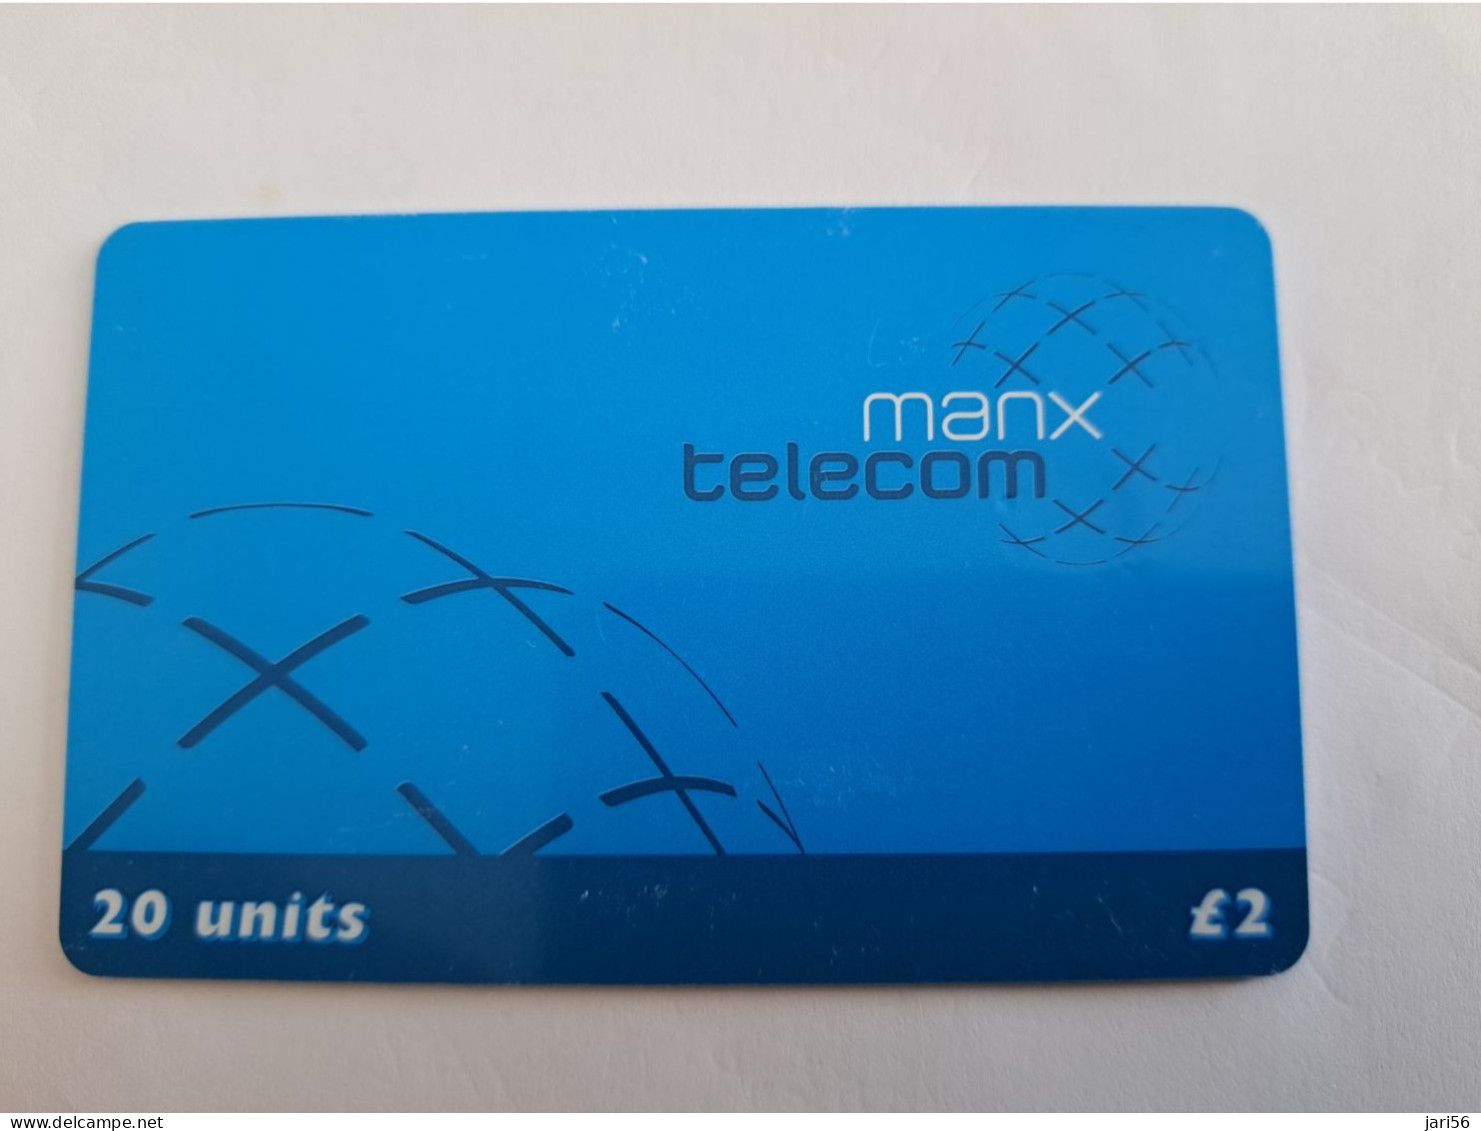 ISLE OF MAN 2 POUND  MANX TELECOM  21 UNITS / MANX TELECOM/ BLUE CARD            CHIP   ** 15104** - Man (Isle Of)